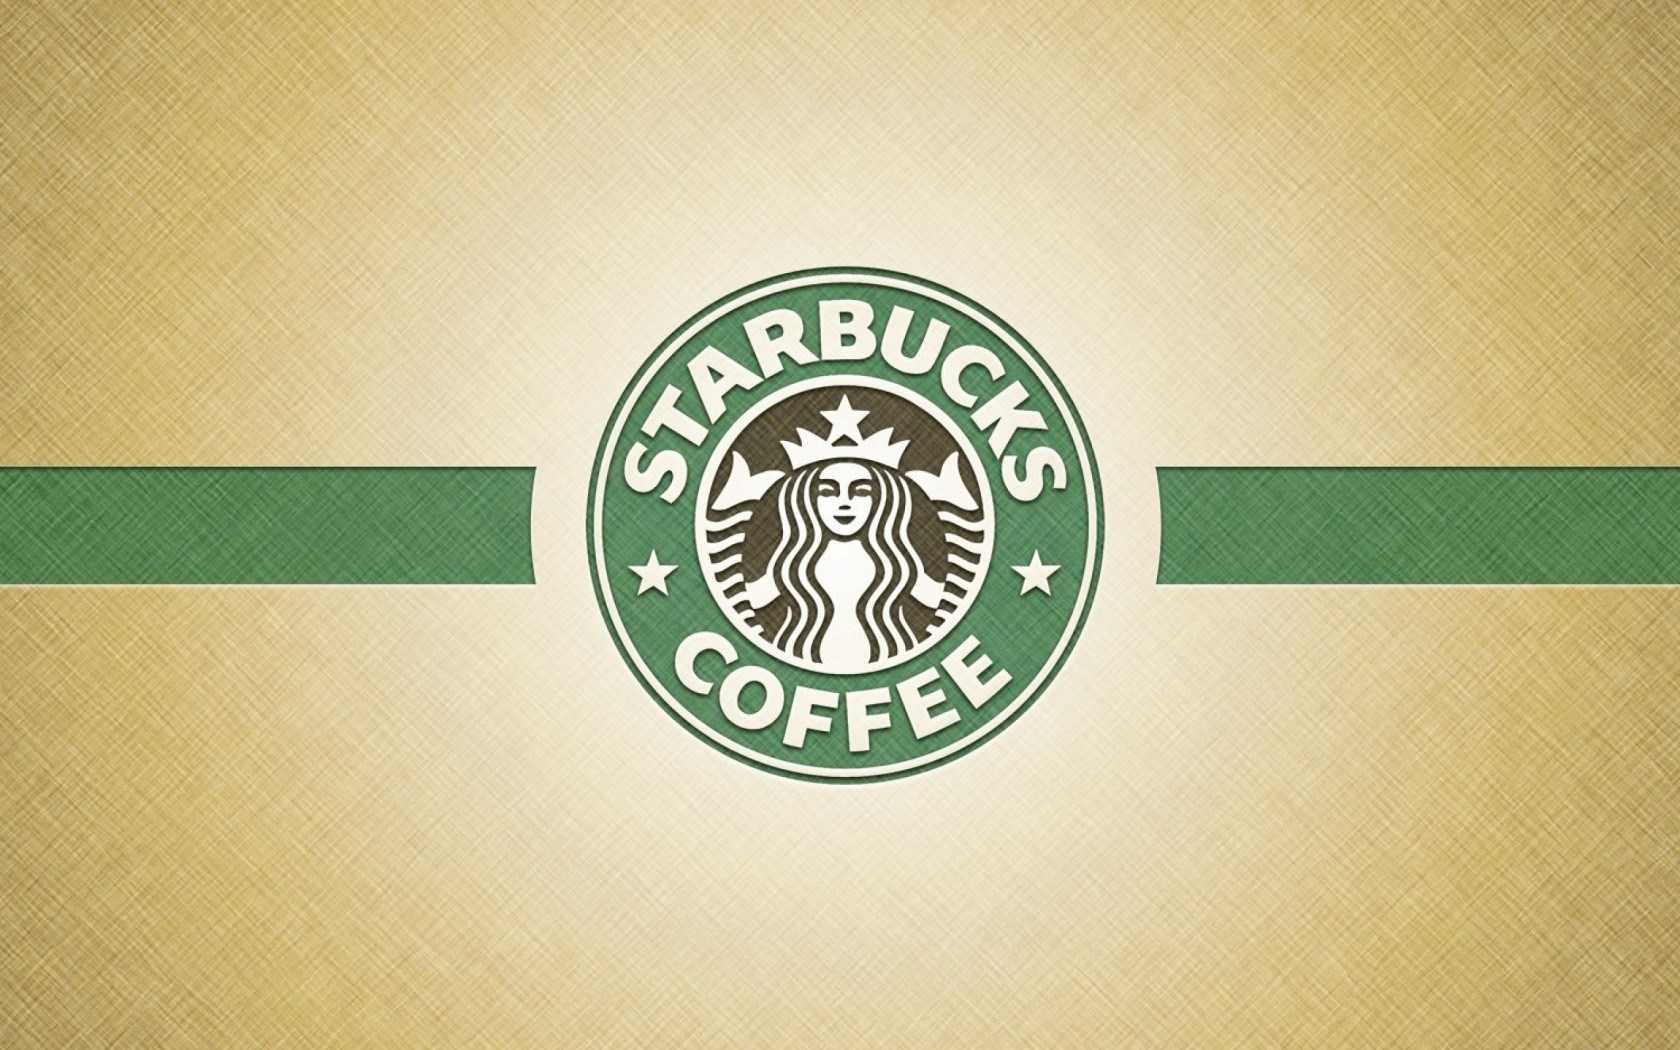 Starbucks Ppt Background – Powerpoint Backgrounds For Free For Starbucks Powerpoint Template